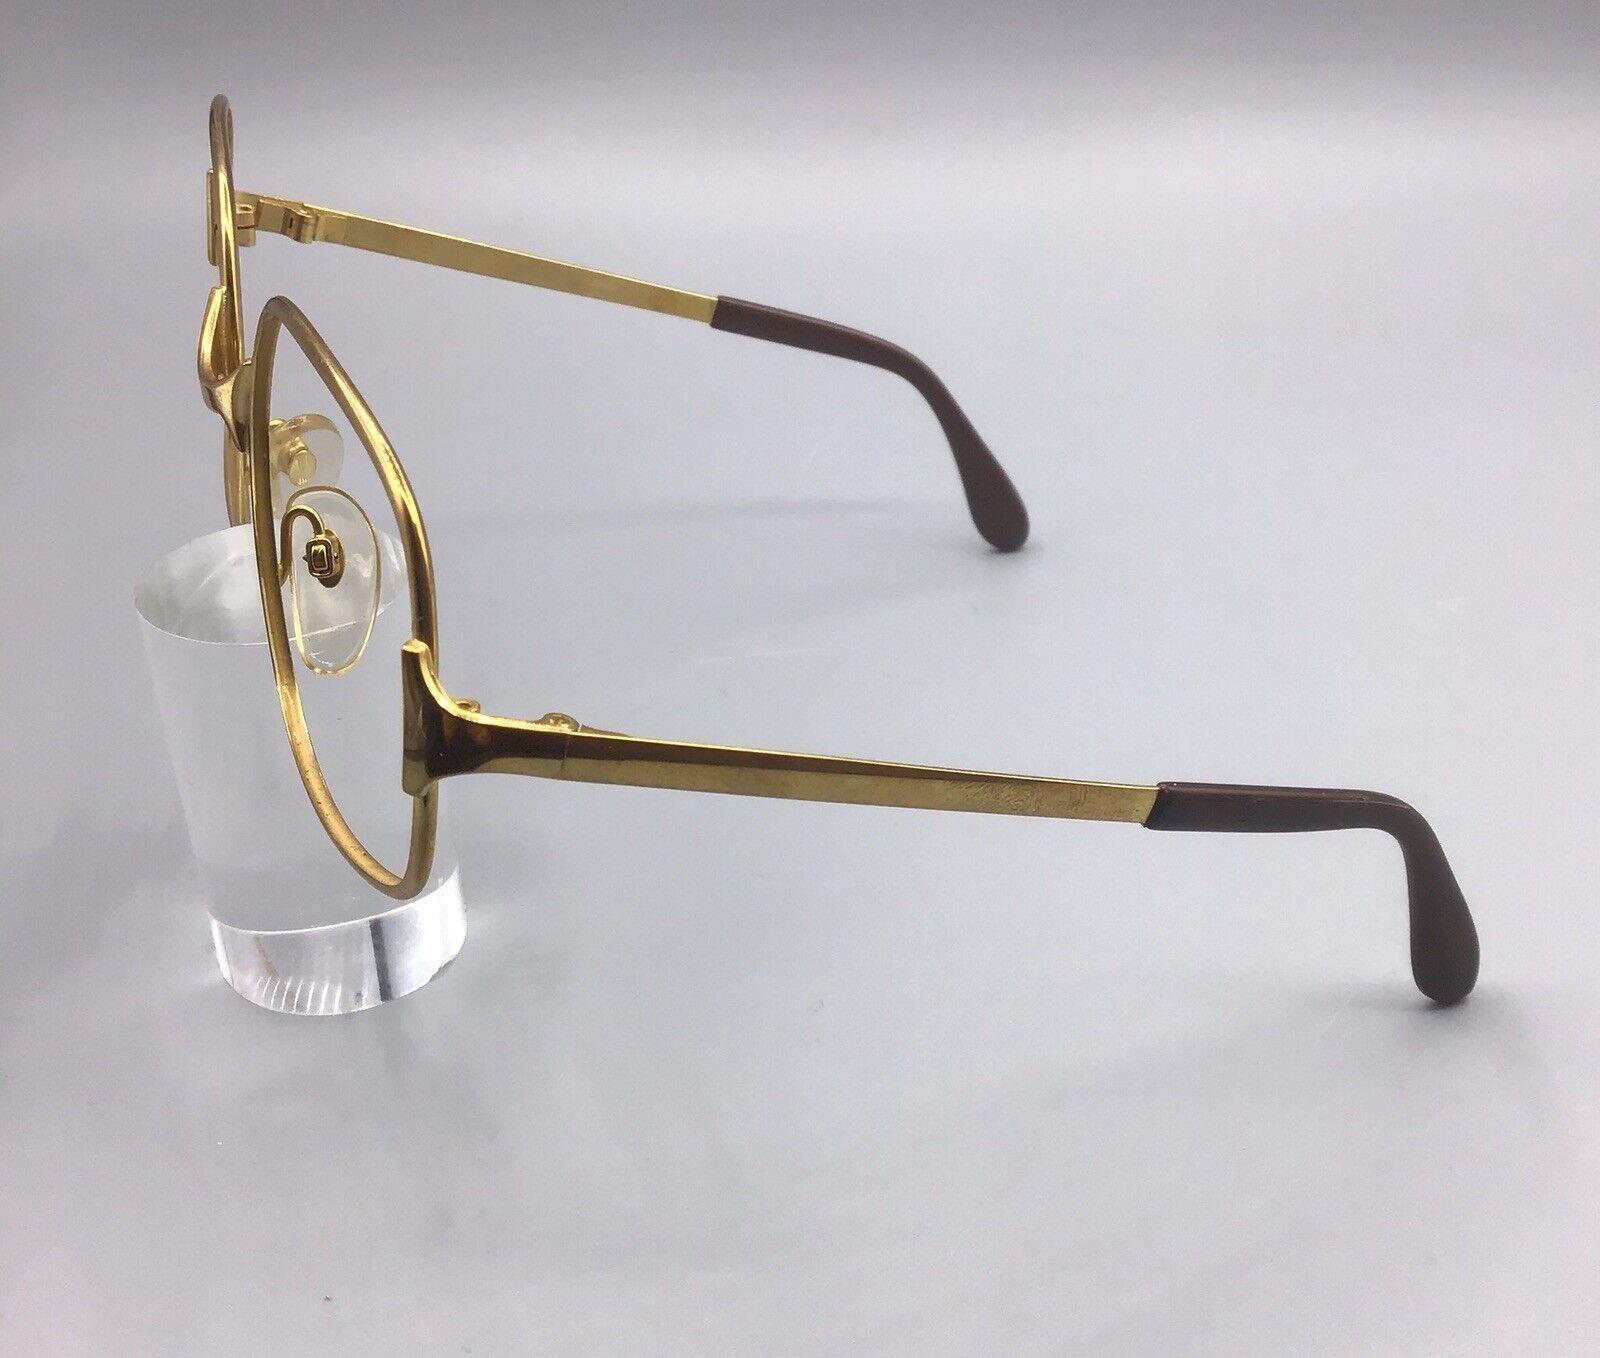 Rodenstock Rona occhiale vintage brillen eyewear lunettes oro gold 1/20 10k